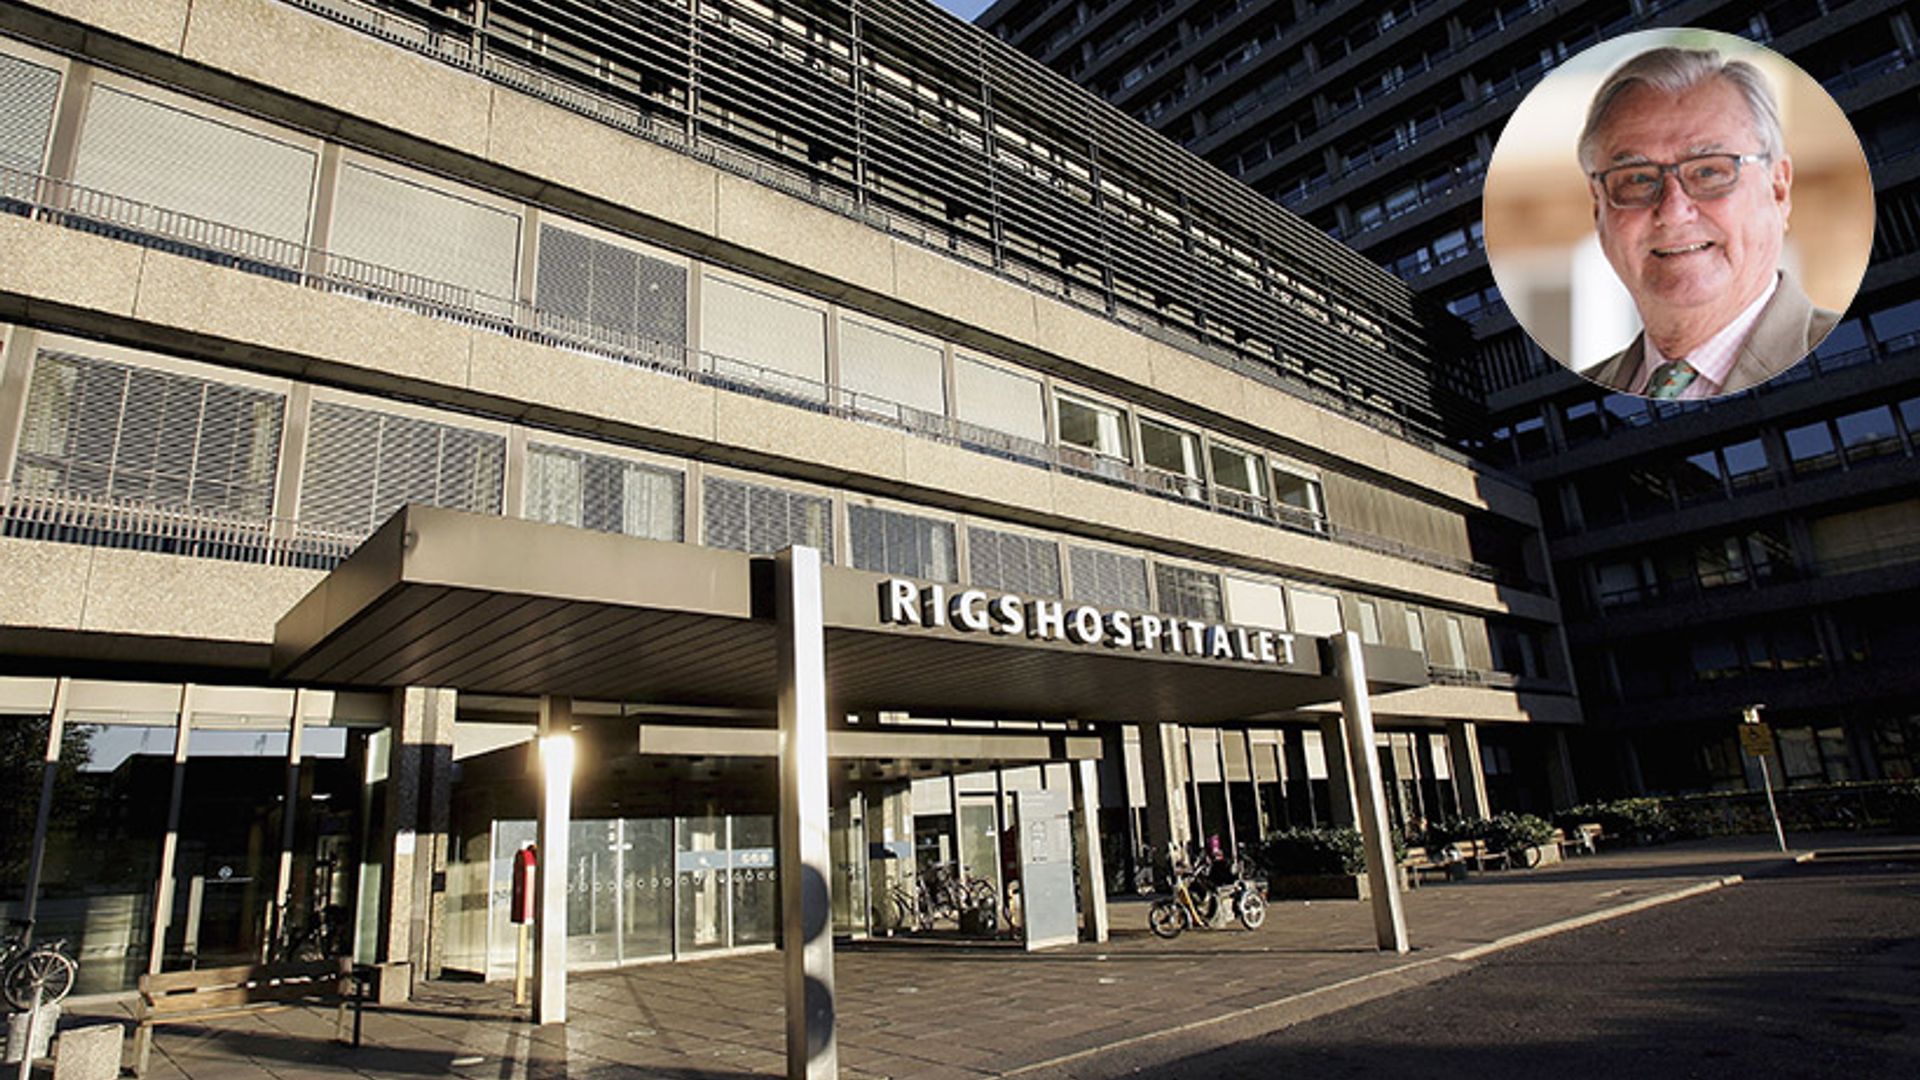 Danish police investigating hospital following Prince Henrik's death